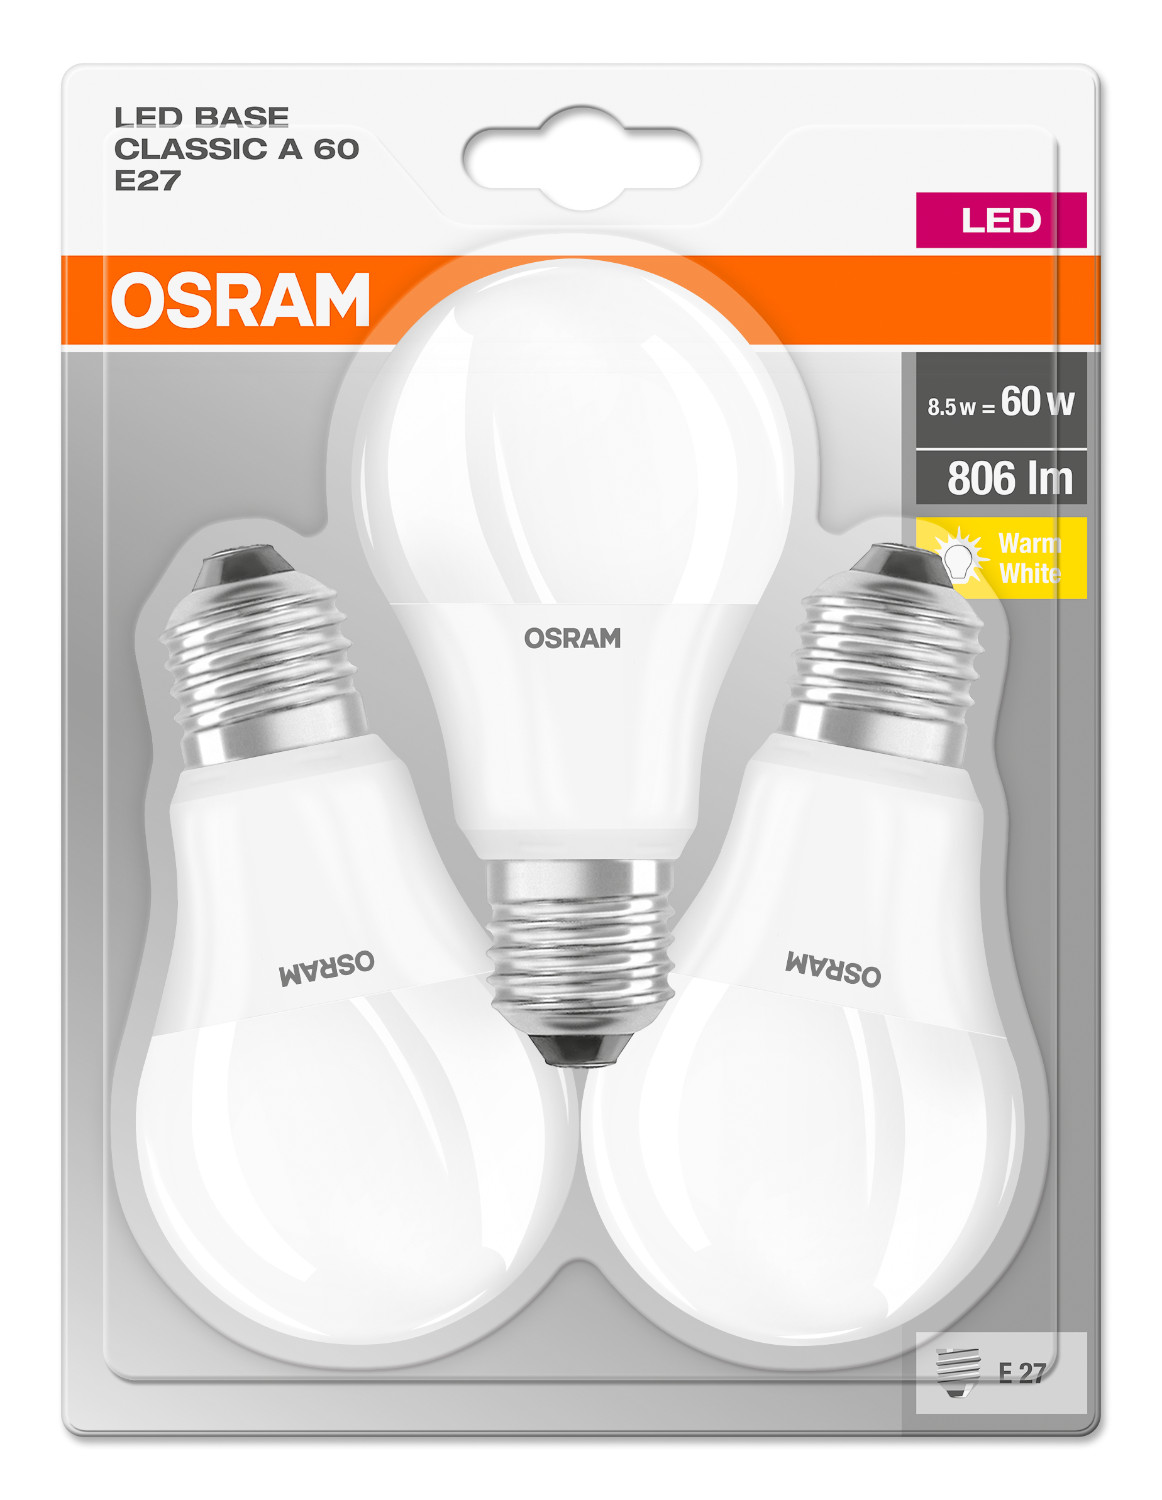 Набор ламп OSRAM BASE A60 8,5W 2700К E27 3 шт. тепл. в Киеве